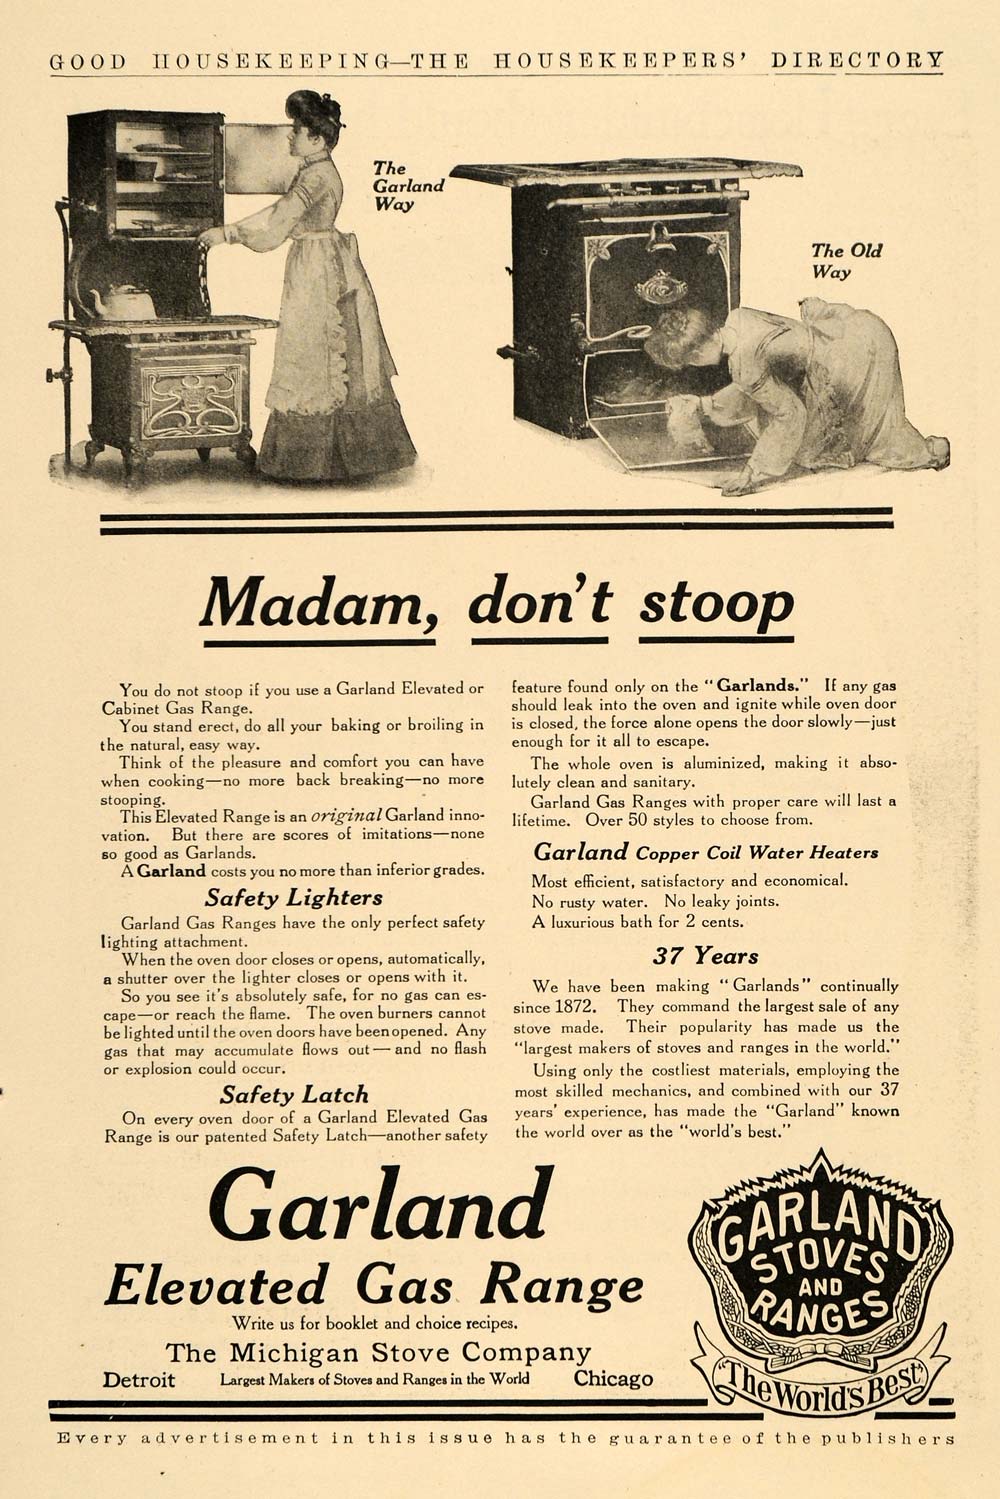 1909 Ad Michigan Stove Co. Garland Elevated Gas Range - ORIGINAL ADVERTISING GH3